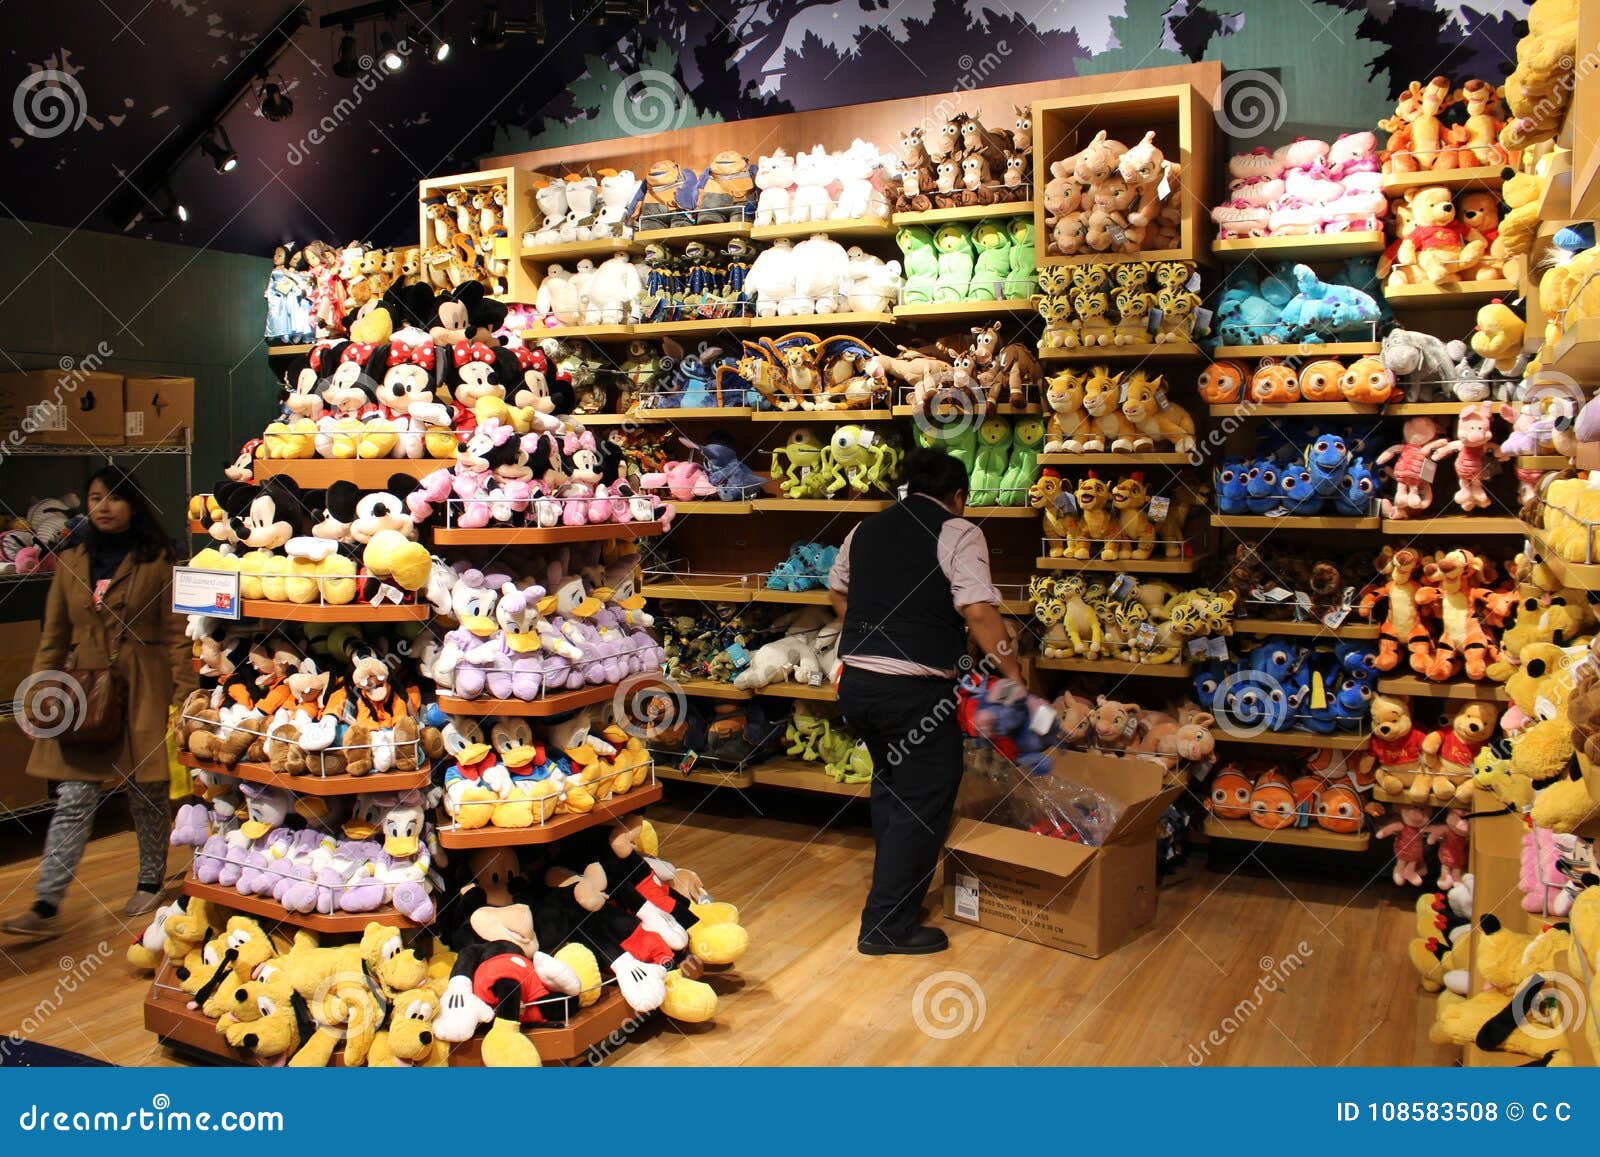 heilig onderwijs interferentie 2,596 Disney Store Photos - Free & Royalty-Free Stock Photos from Dreamstime